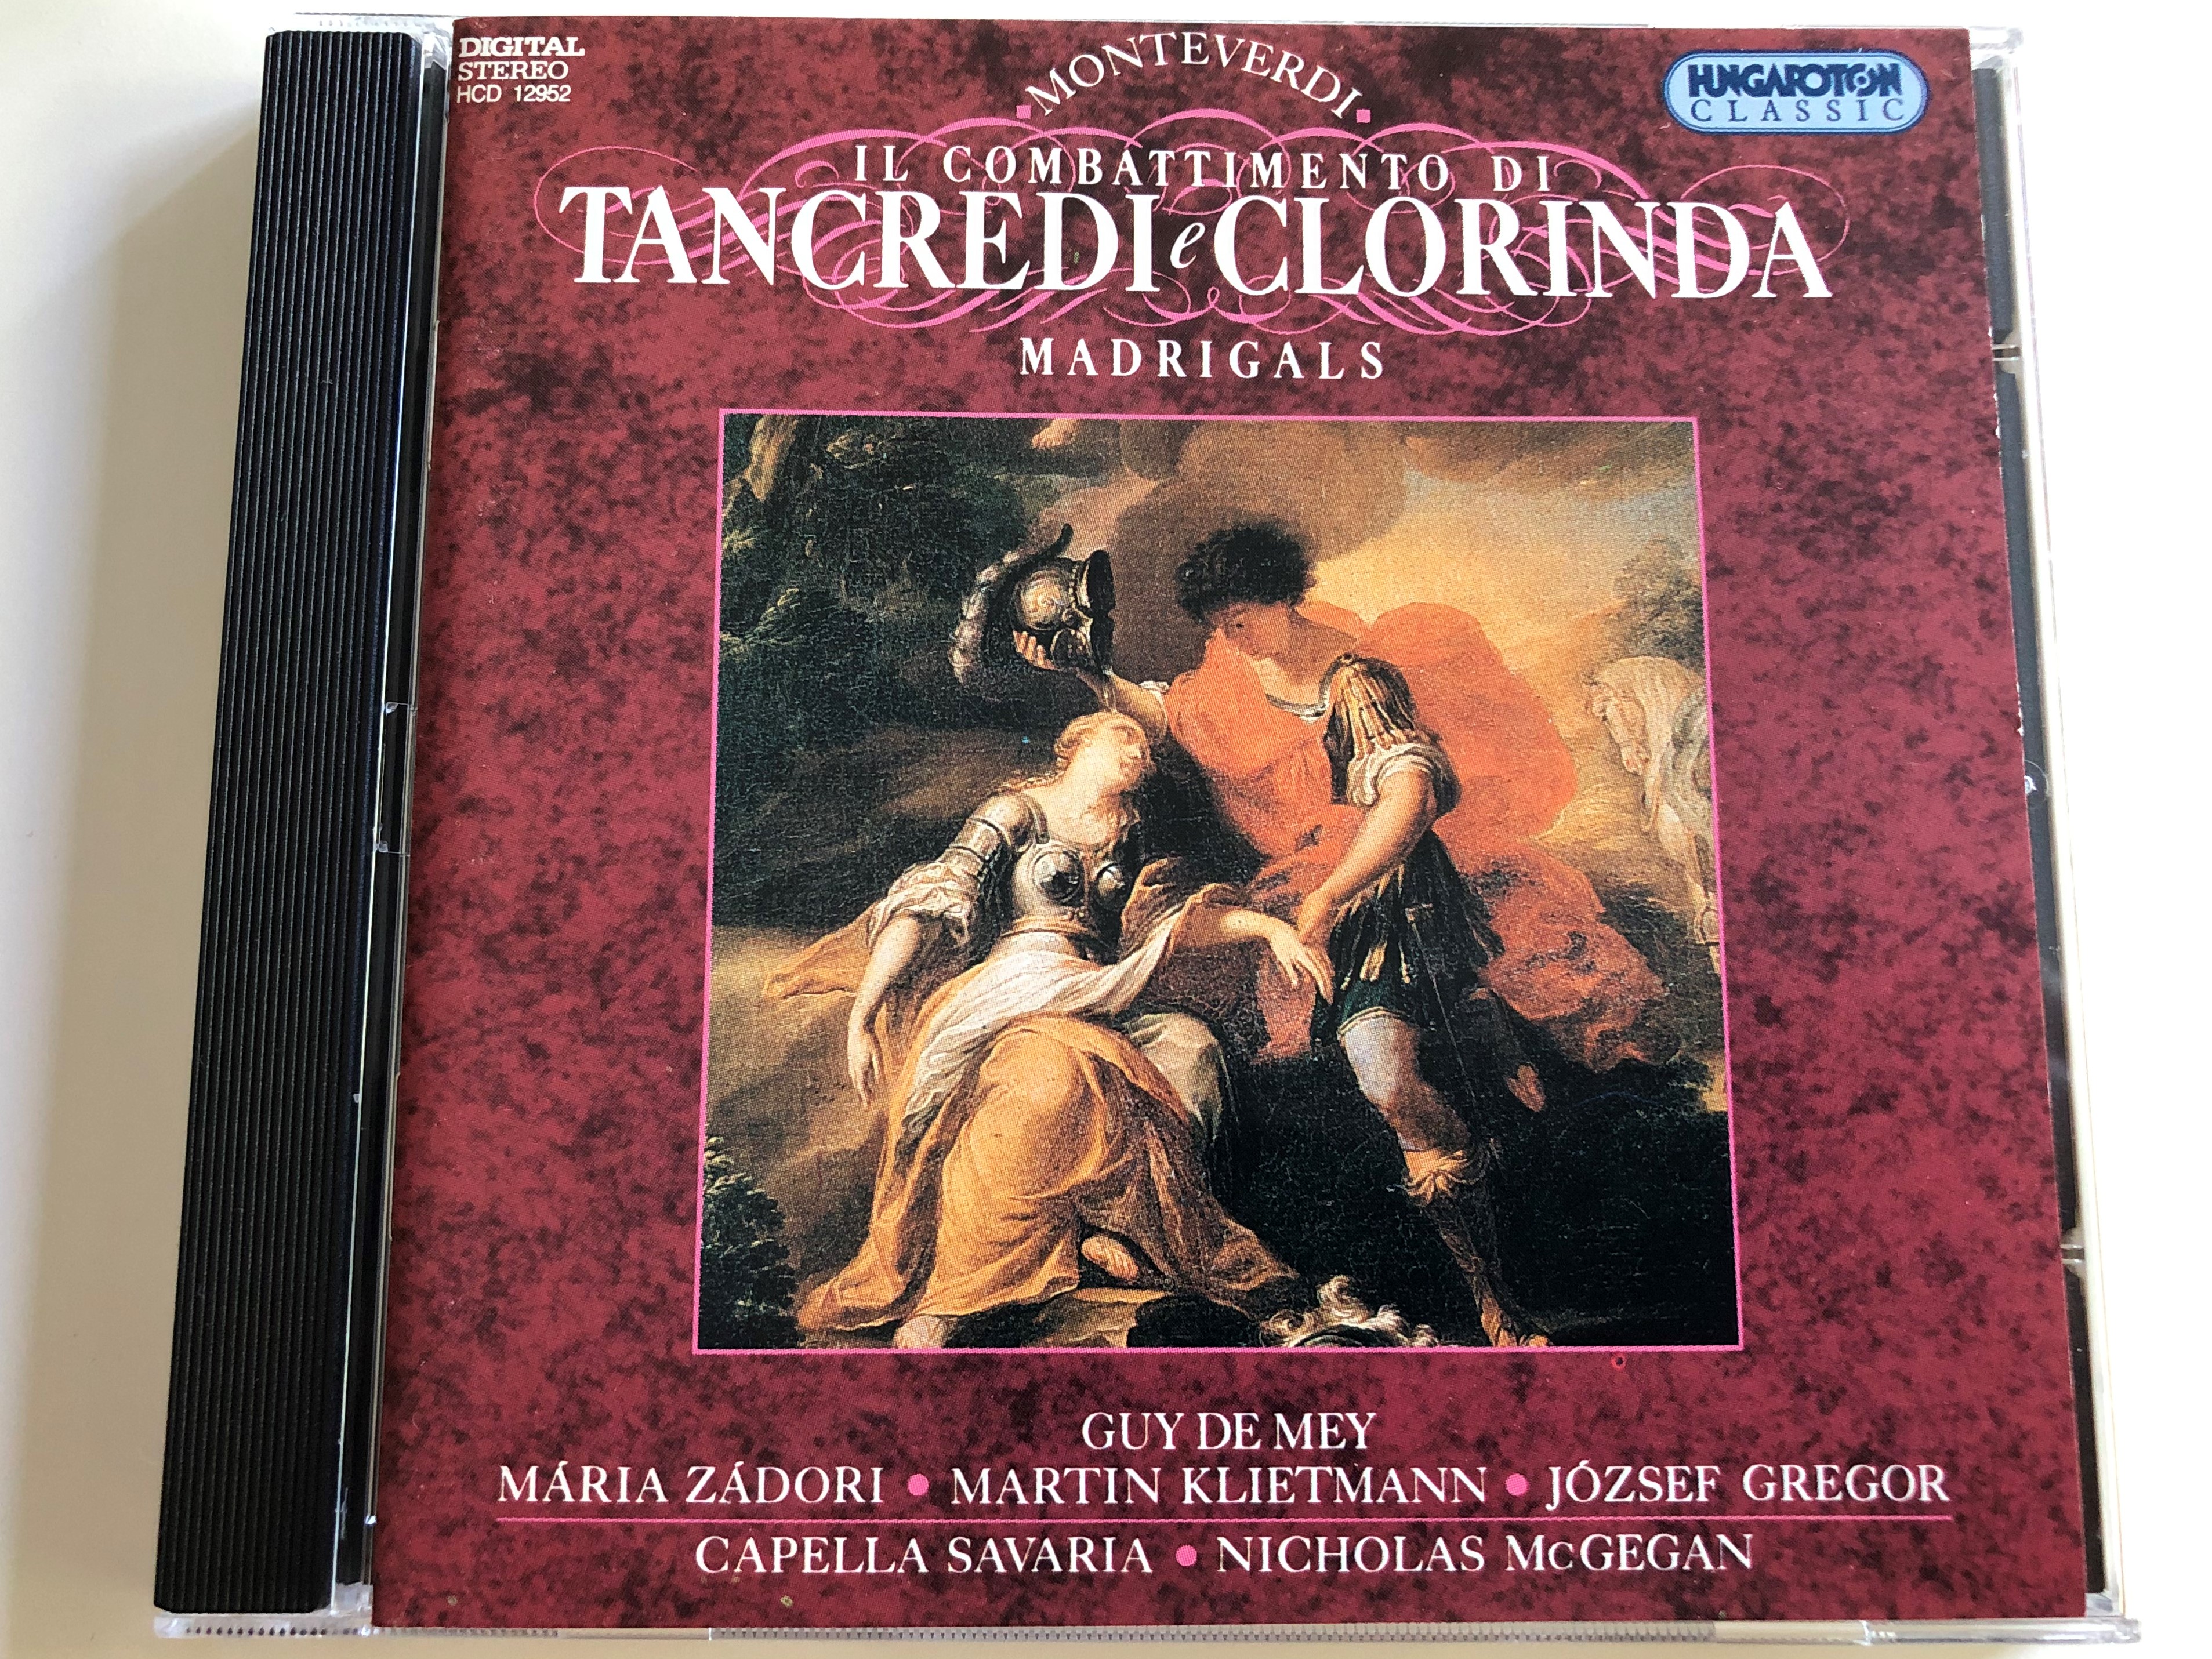 monteverdi-il-comattimento-di-tancredi-e-clorinda-madrigals-guy-de-mey-m-ria-z-dori-martin-klietmann-j-zsef-gregor-capella-savaria-nicholas-mcgegan-hungaroton-classic-audio-cd-1995-1-.jpg